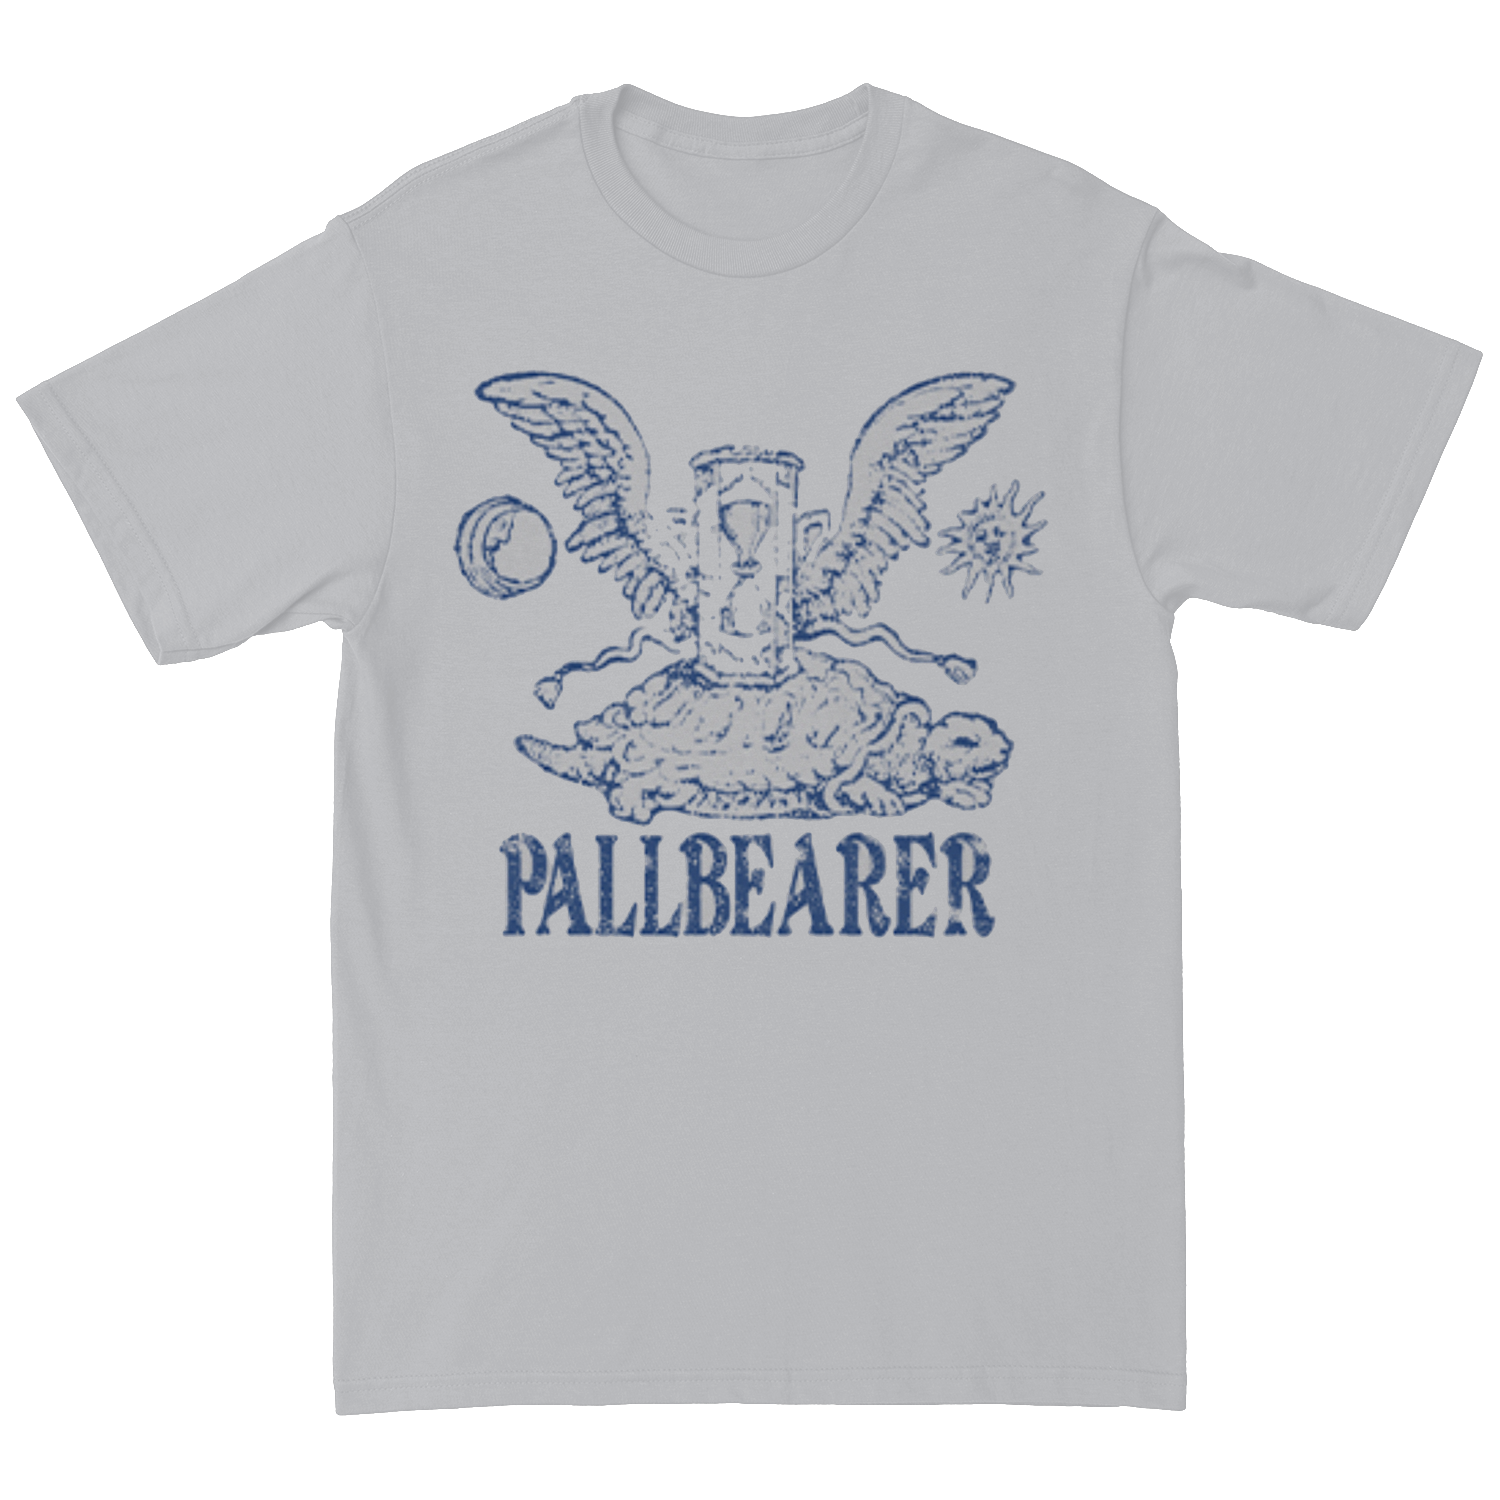 PALLBEARER "Time Travel" White T-Shirt (Final Run)